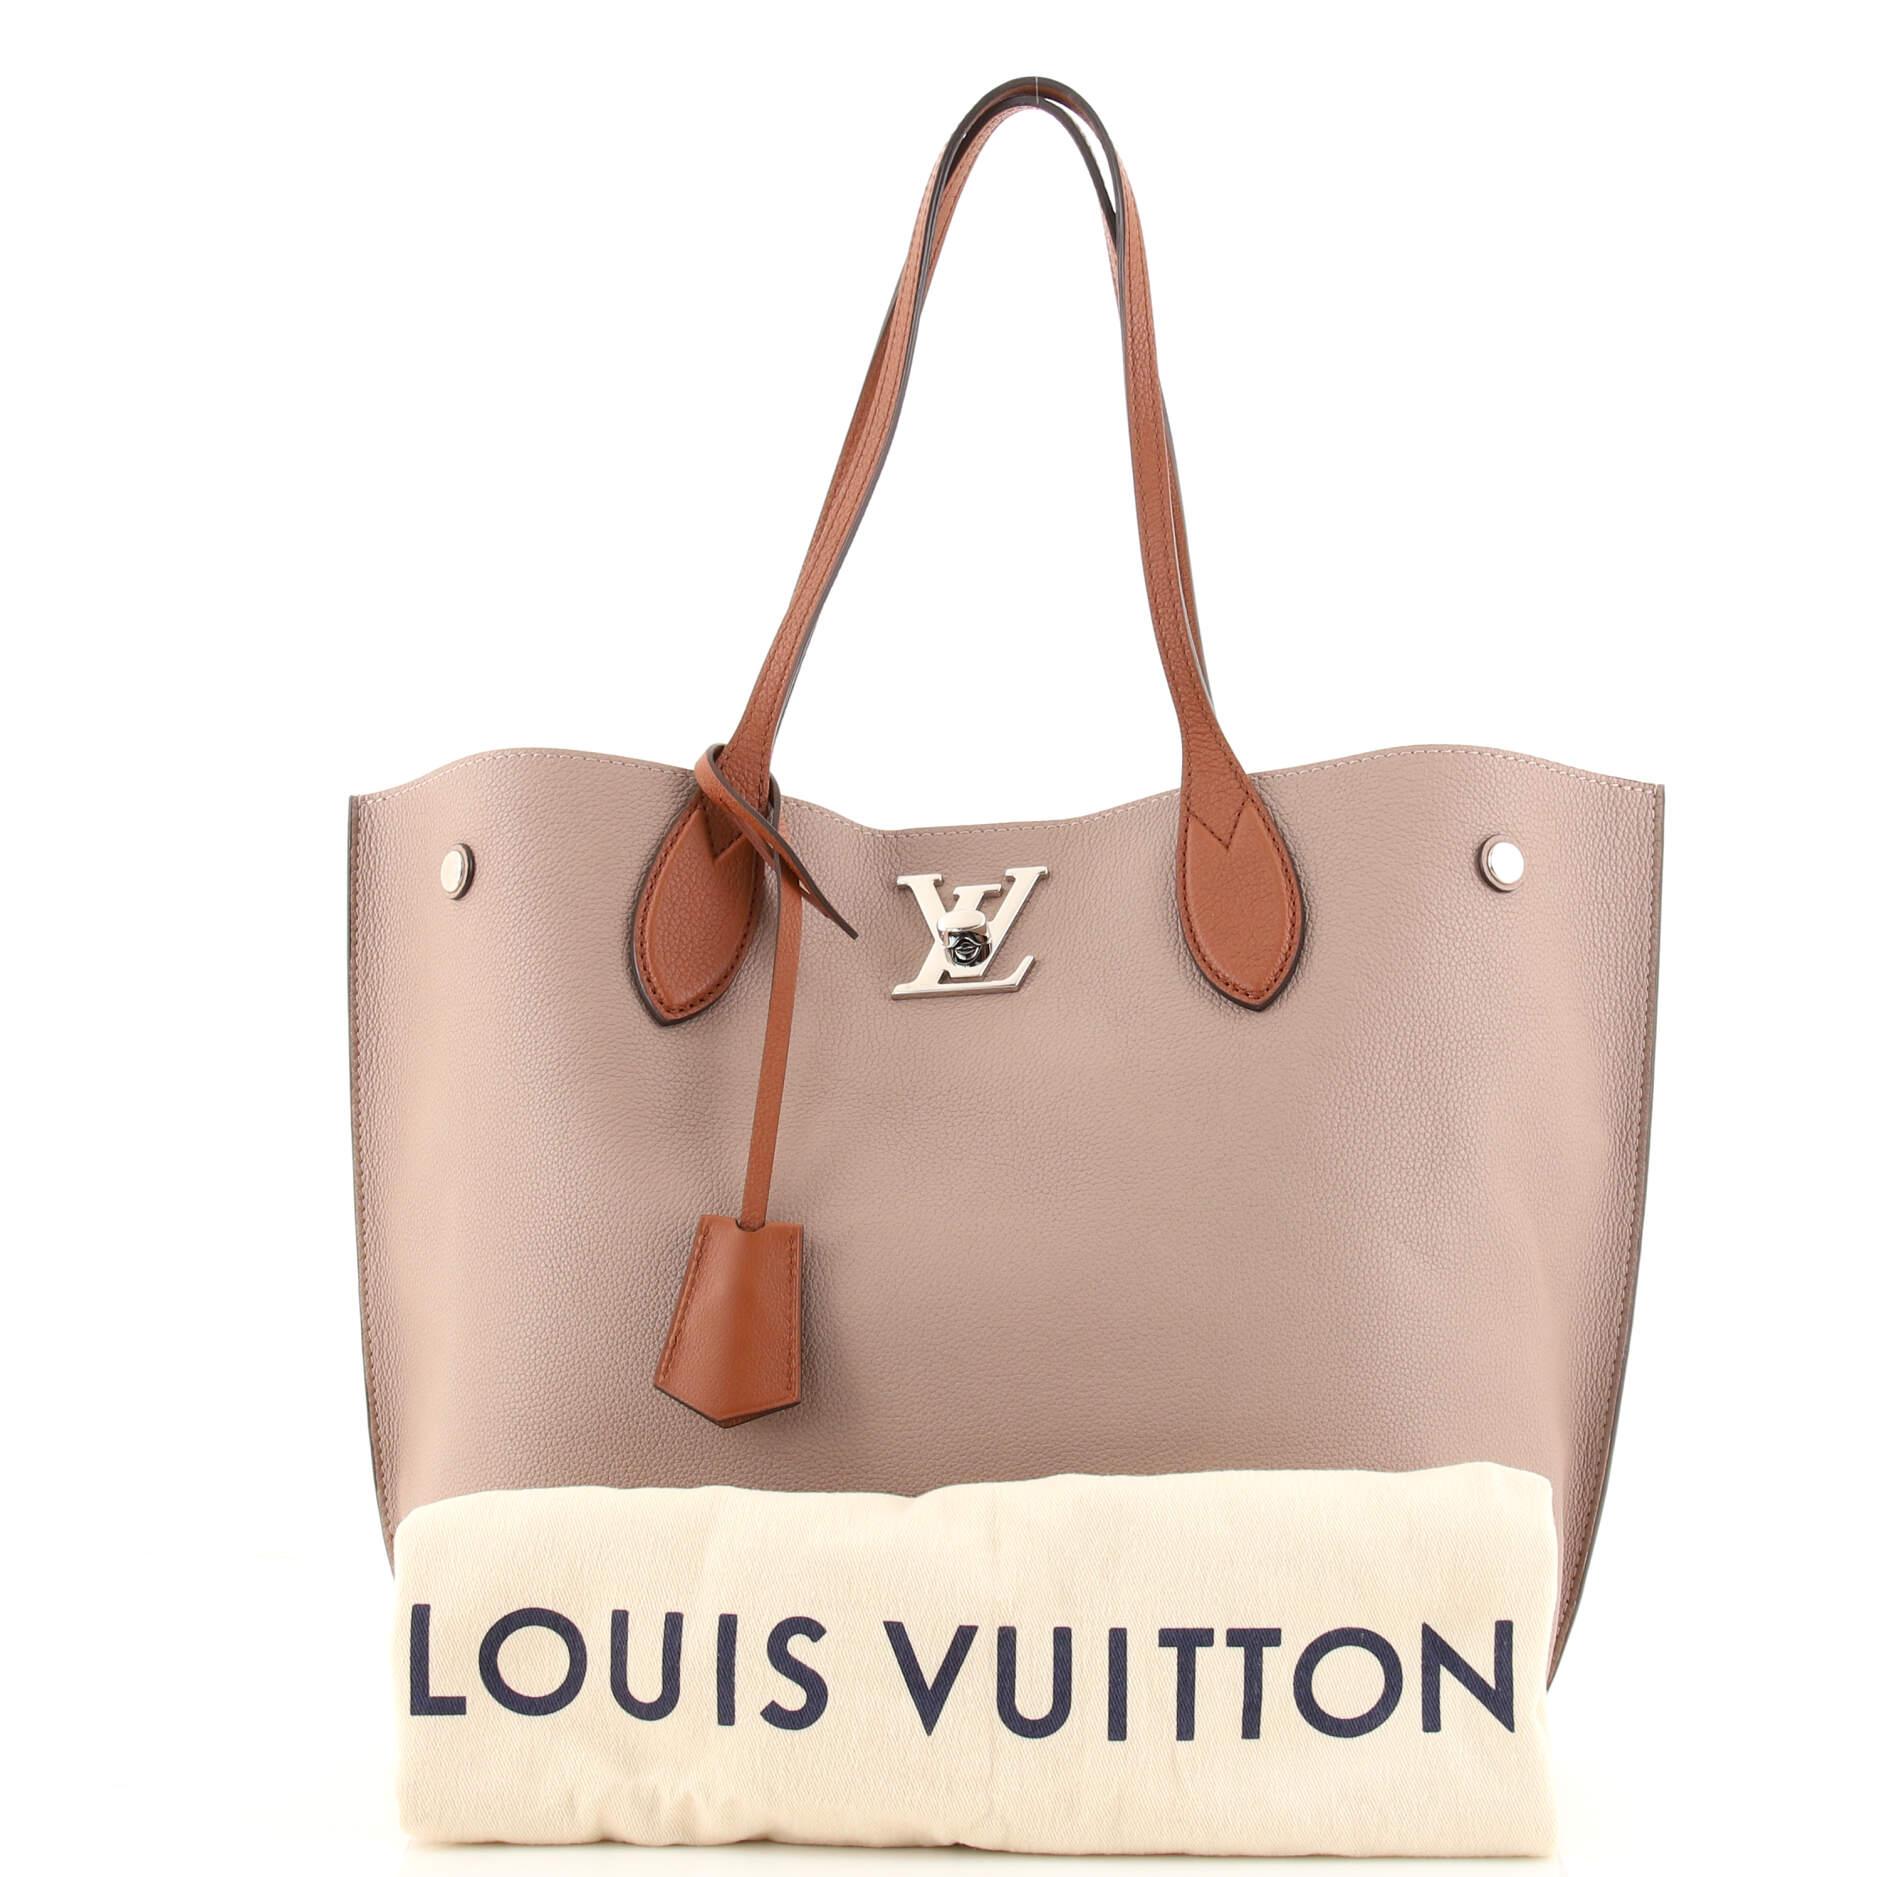 Authentic Louis Vuitton lockme braided tote